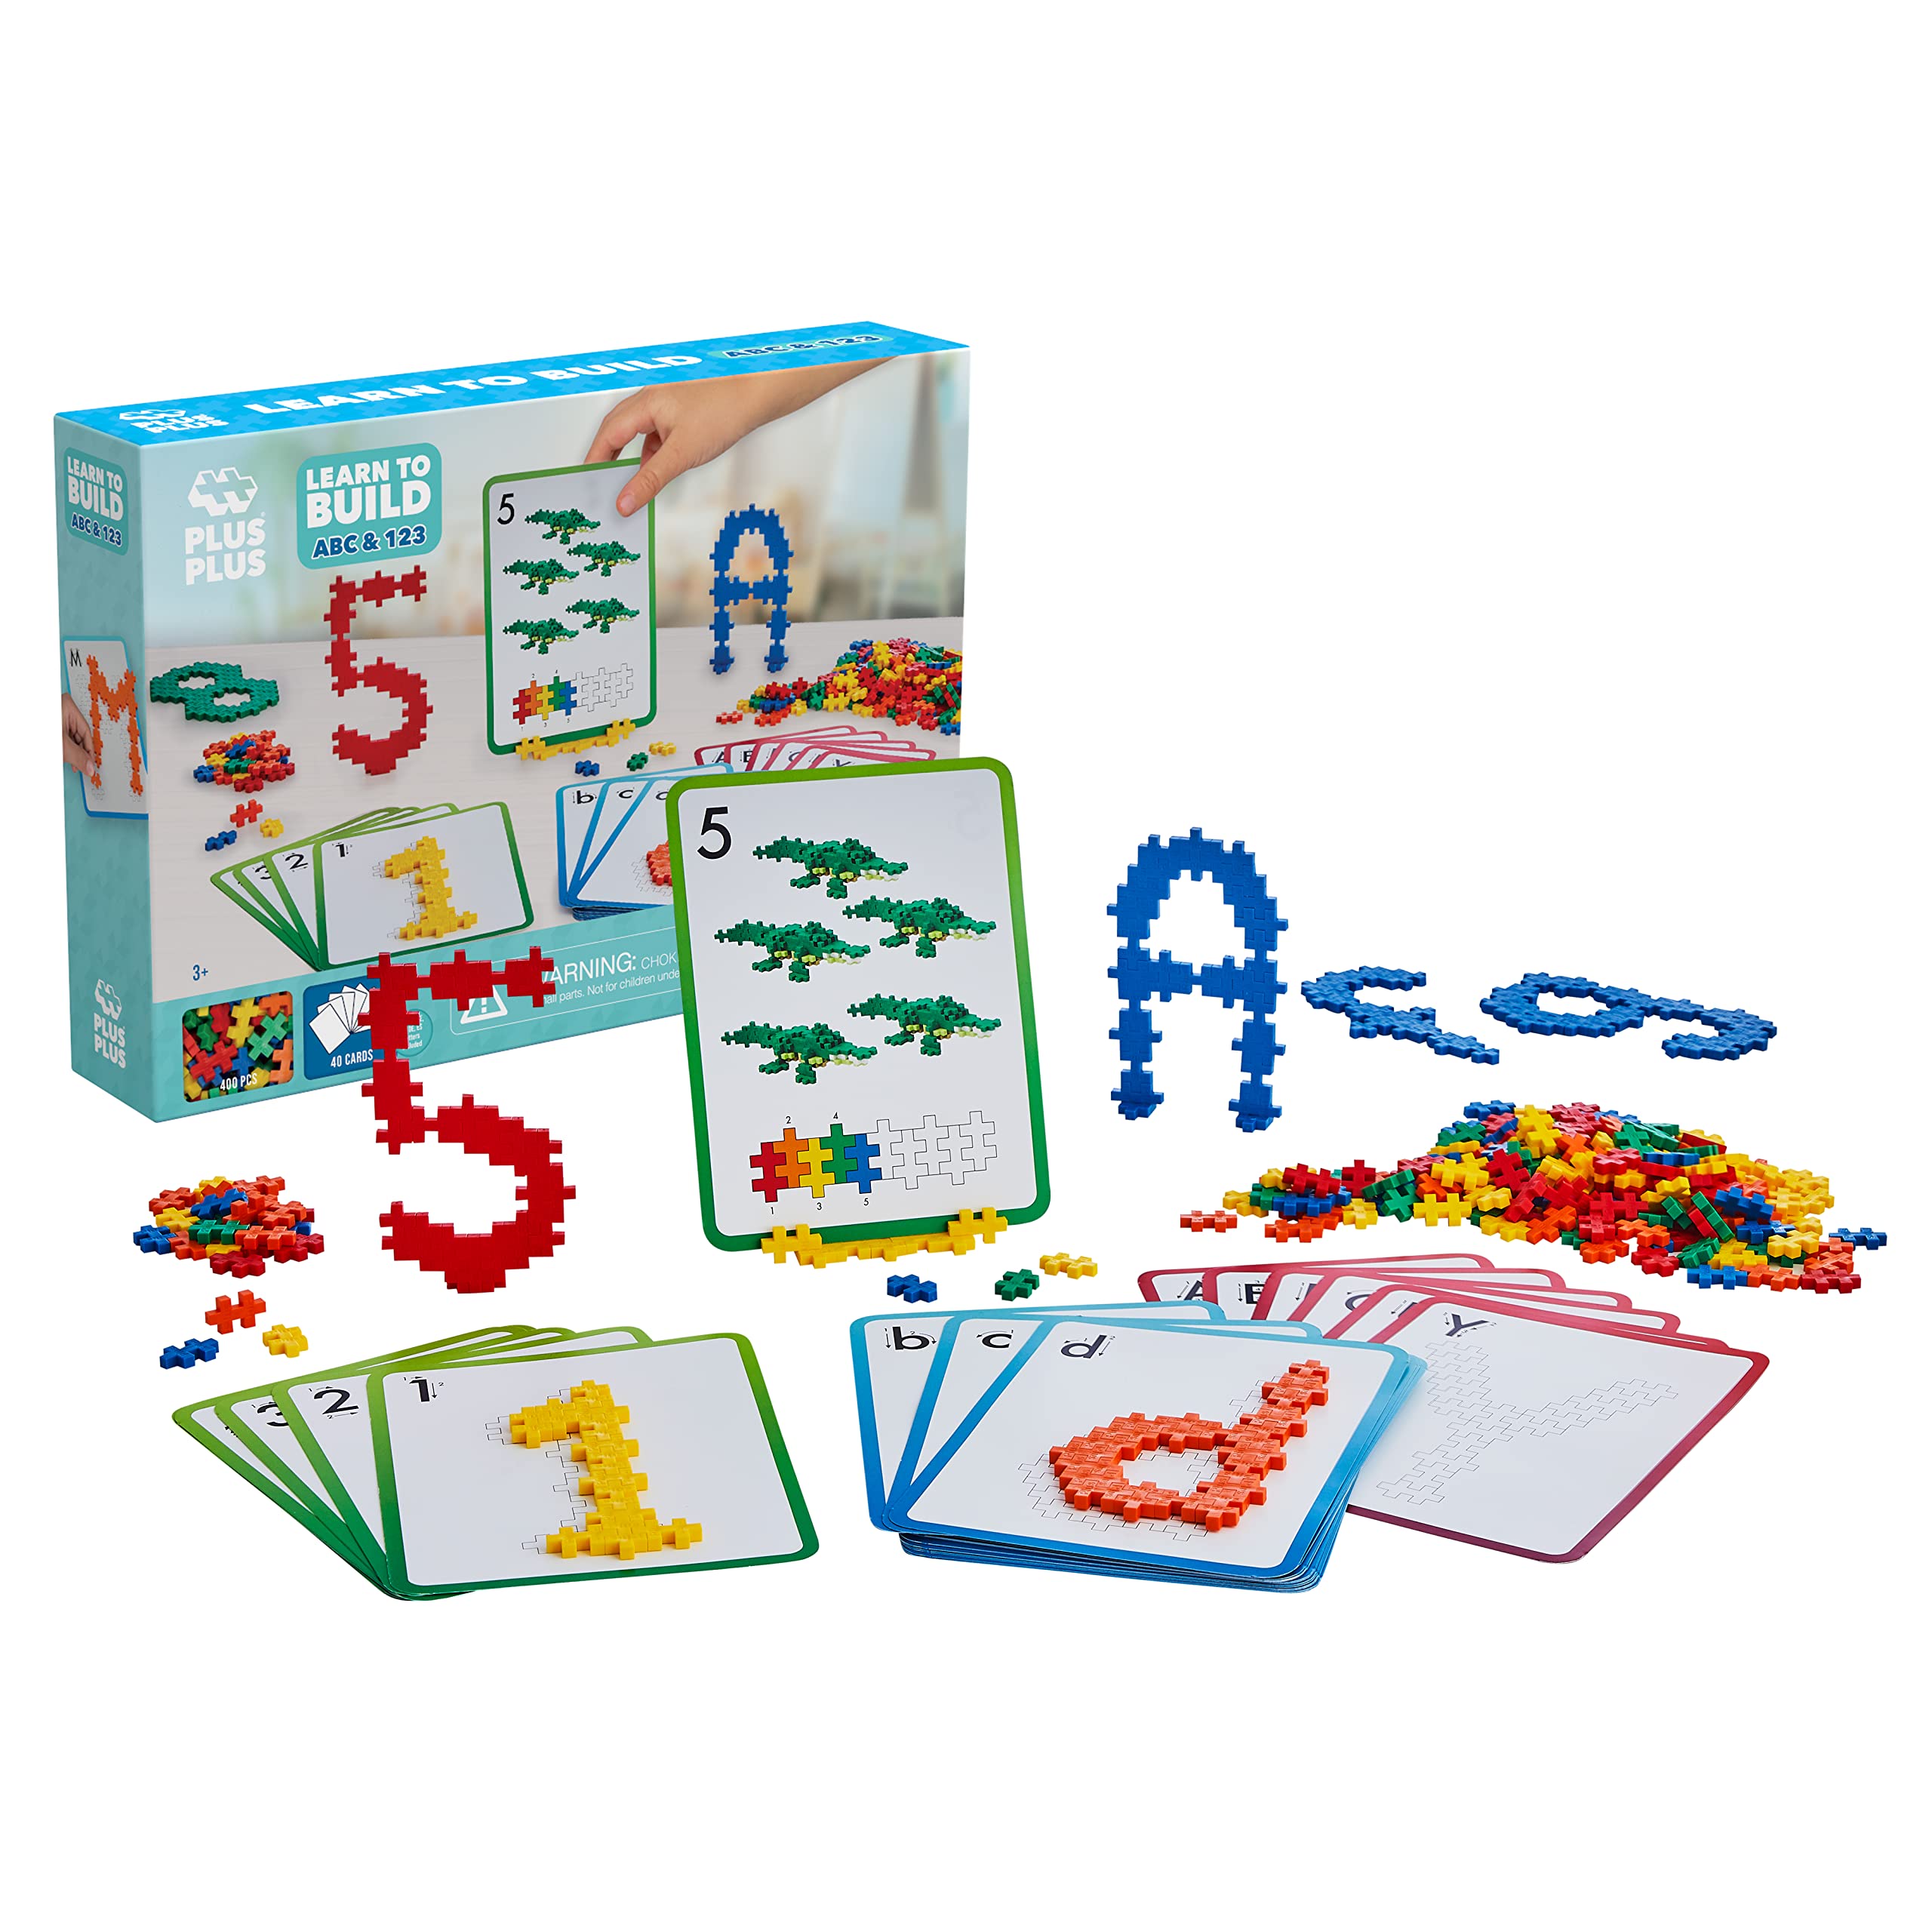 PLUS PLUS - Learn to Build ABC & 123 - 400 Pieces, 40 Flash Cards - Construction Building STEM / STEAM Toy, Interlocking Mini Puzzle Blocks for Kids